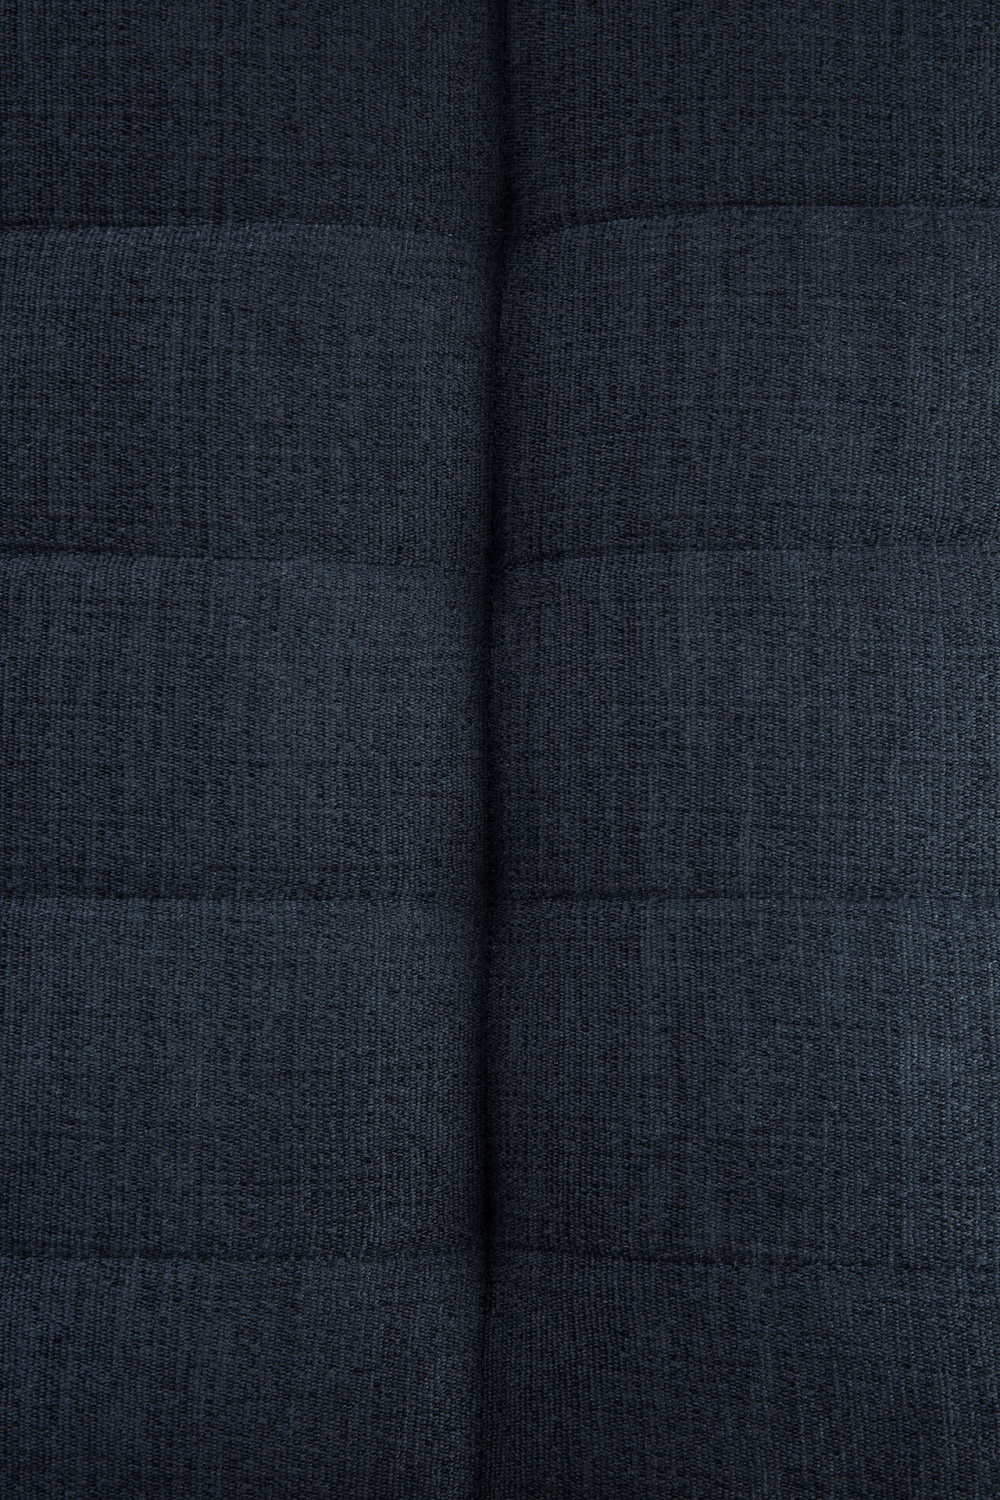 Blue Fabric Corner Sofa | Ethnicraft N701 | Oroa.com